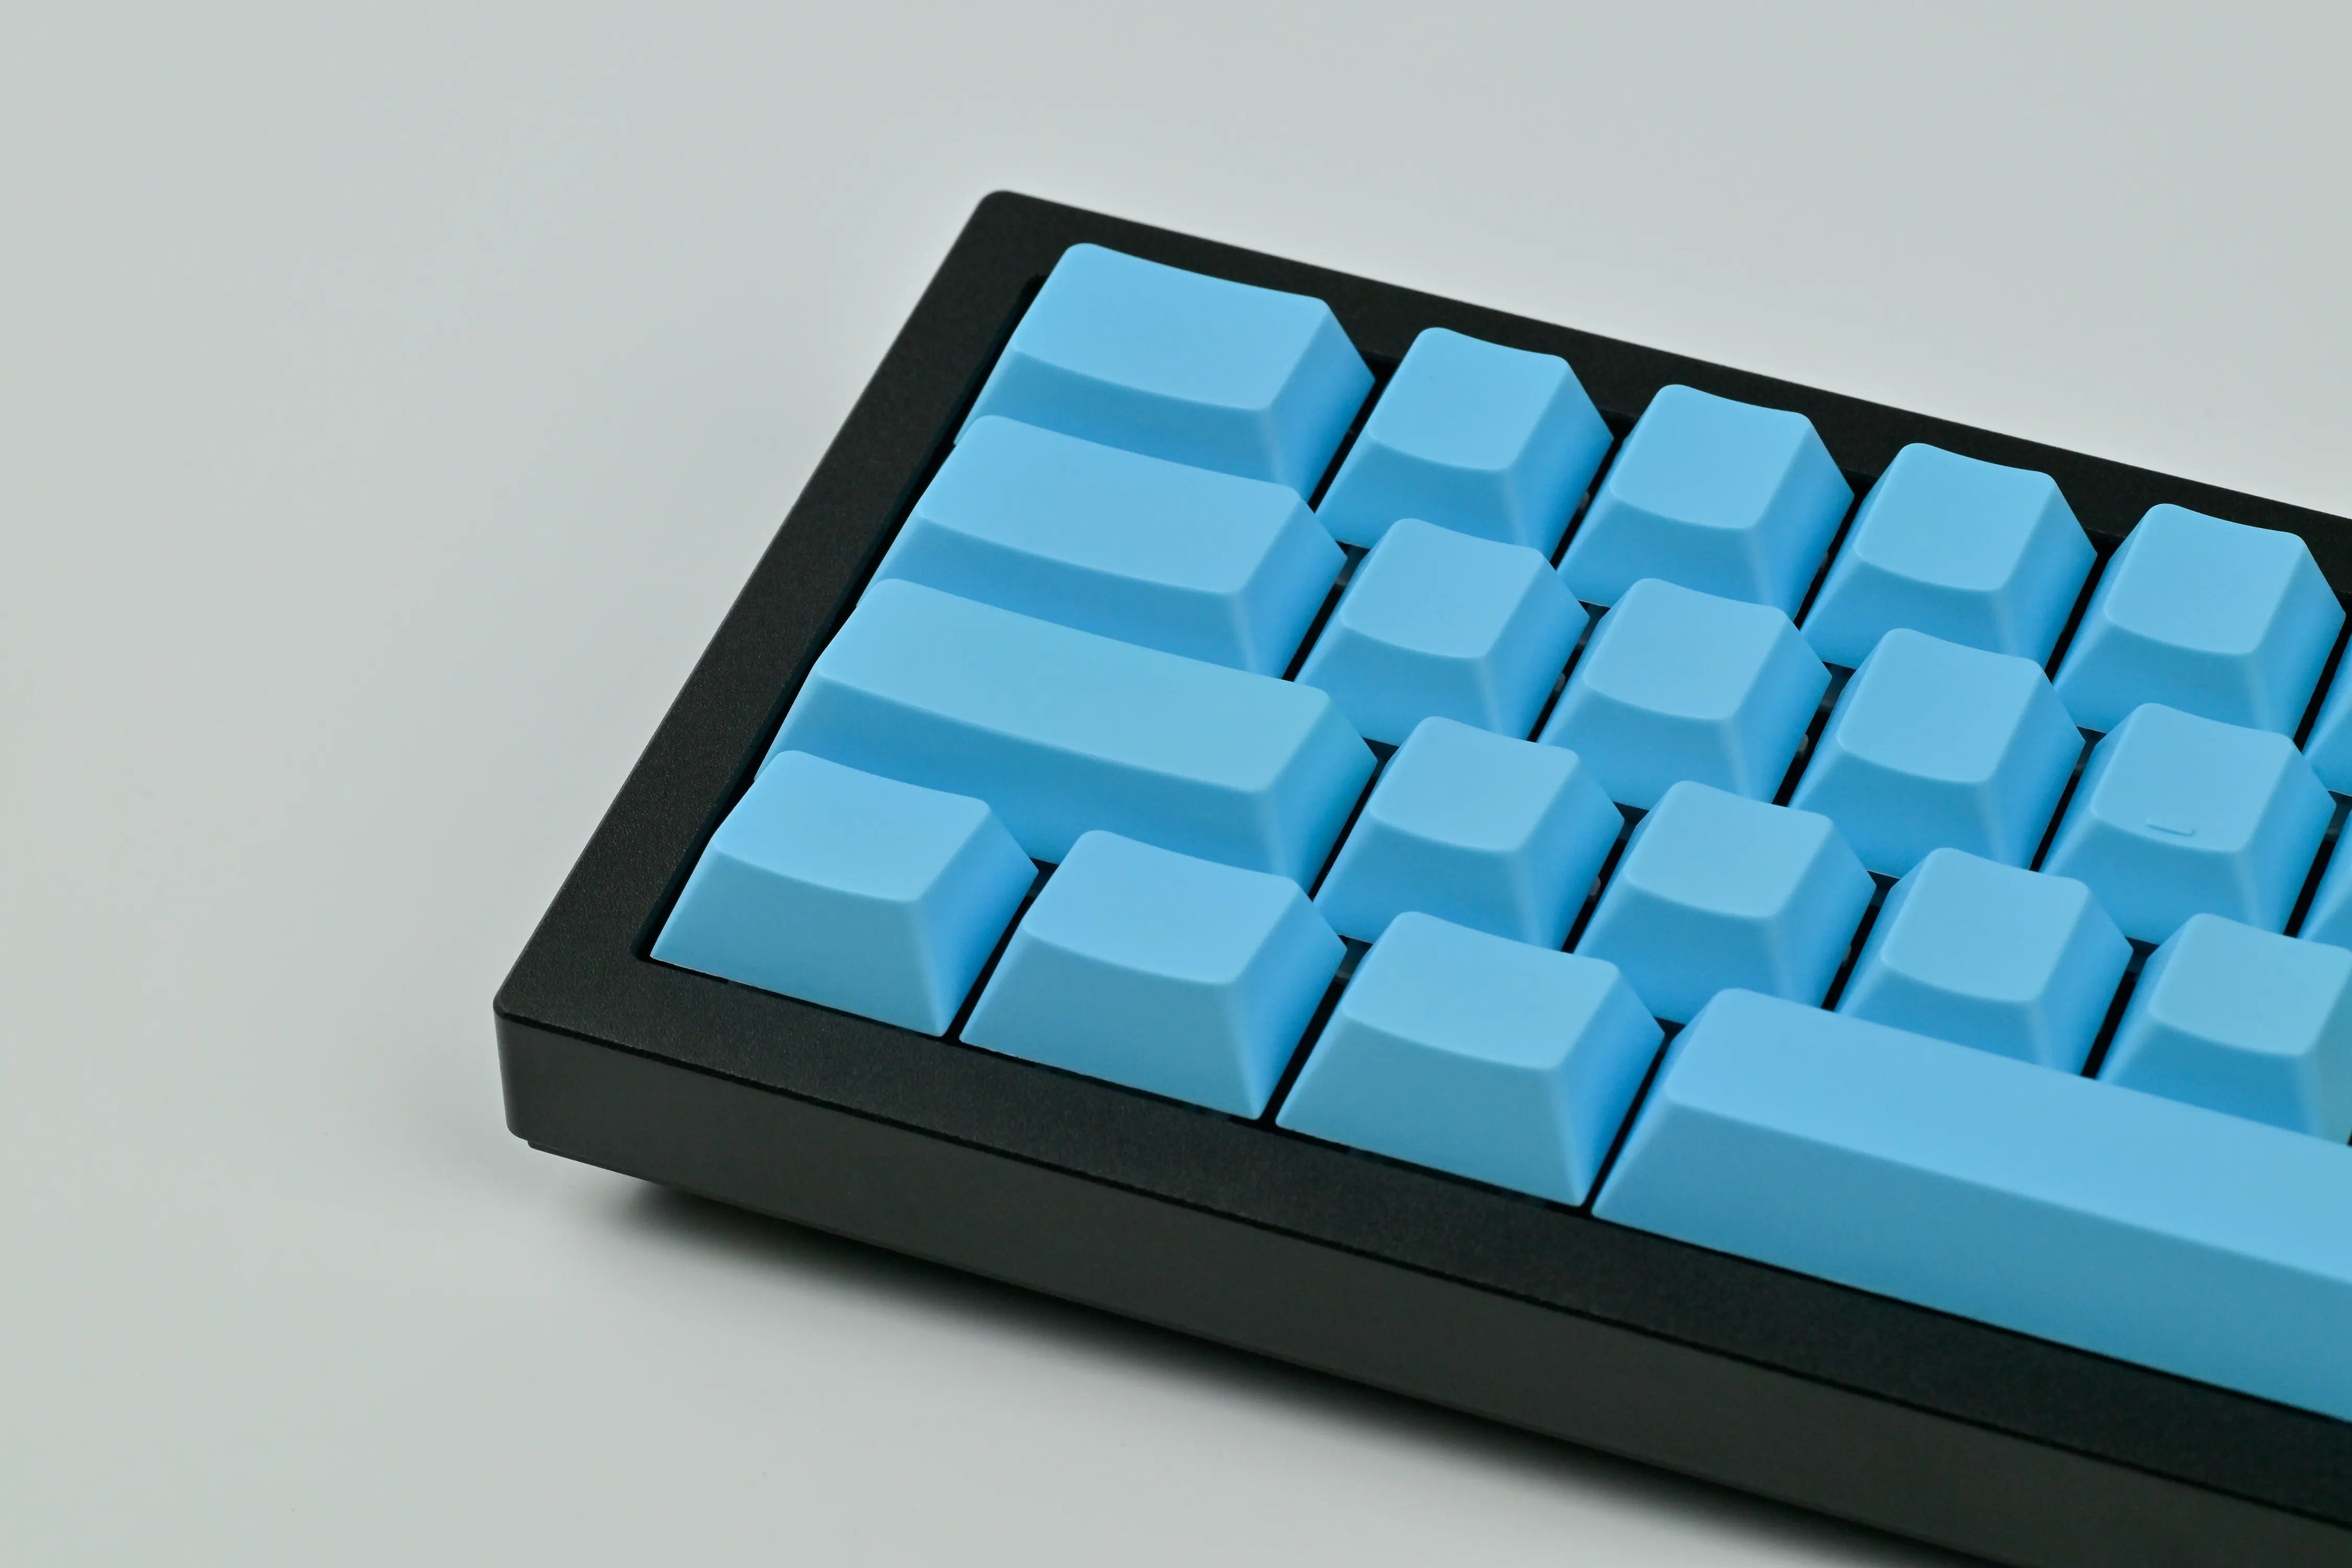 Keyreative ABS Cherry Profile Light Blue Blank Keycaps